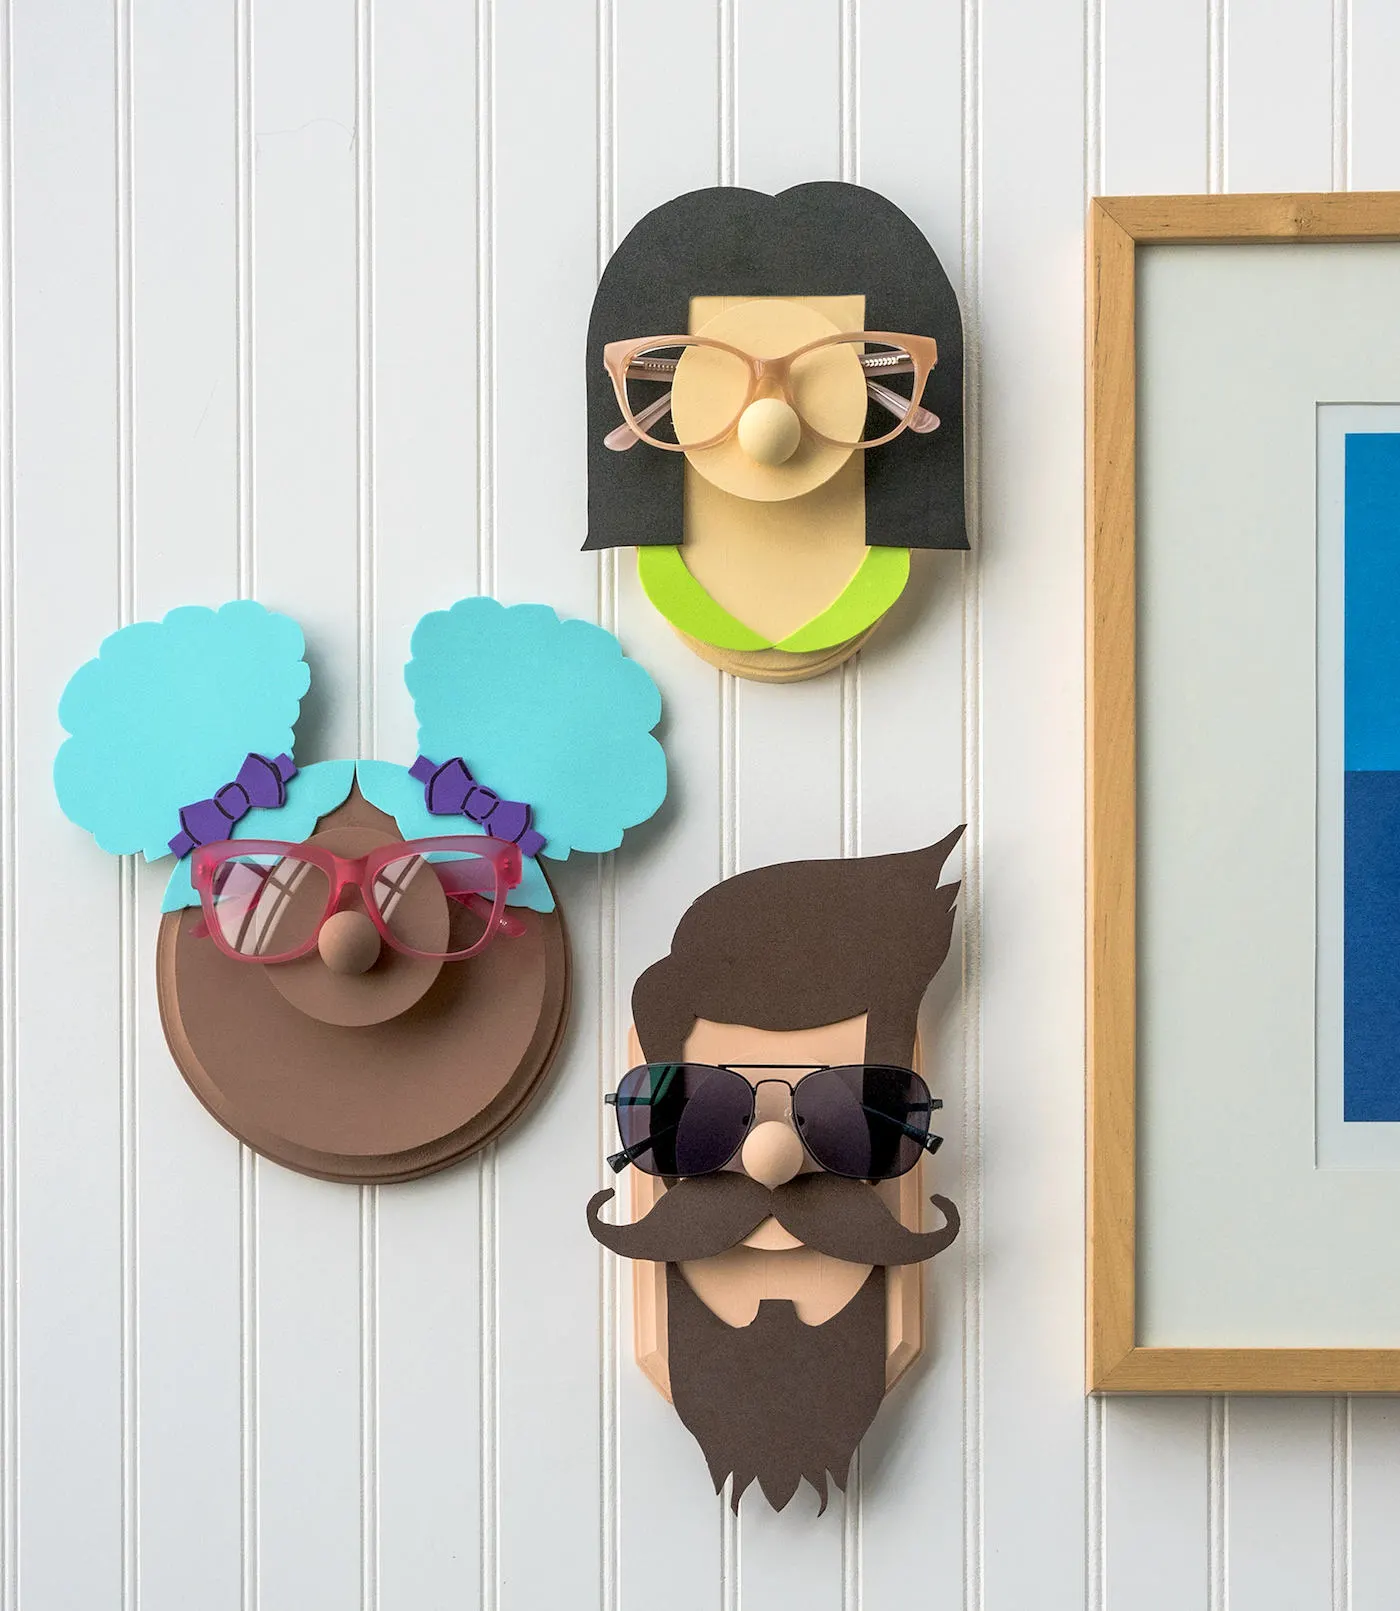 DIY Glasses Holder Display with Fun Faces - Mod Podge Rocks